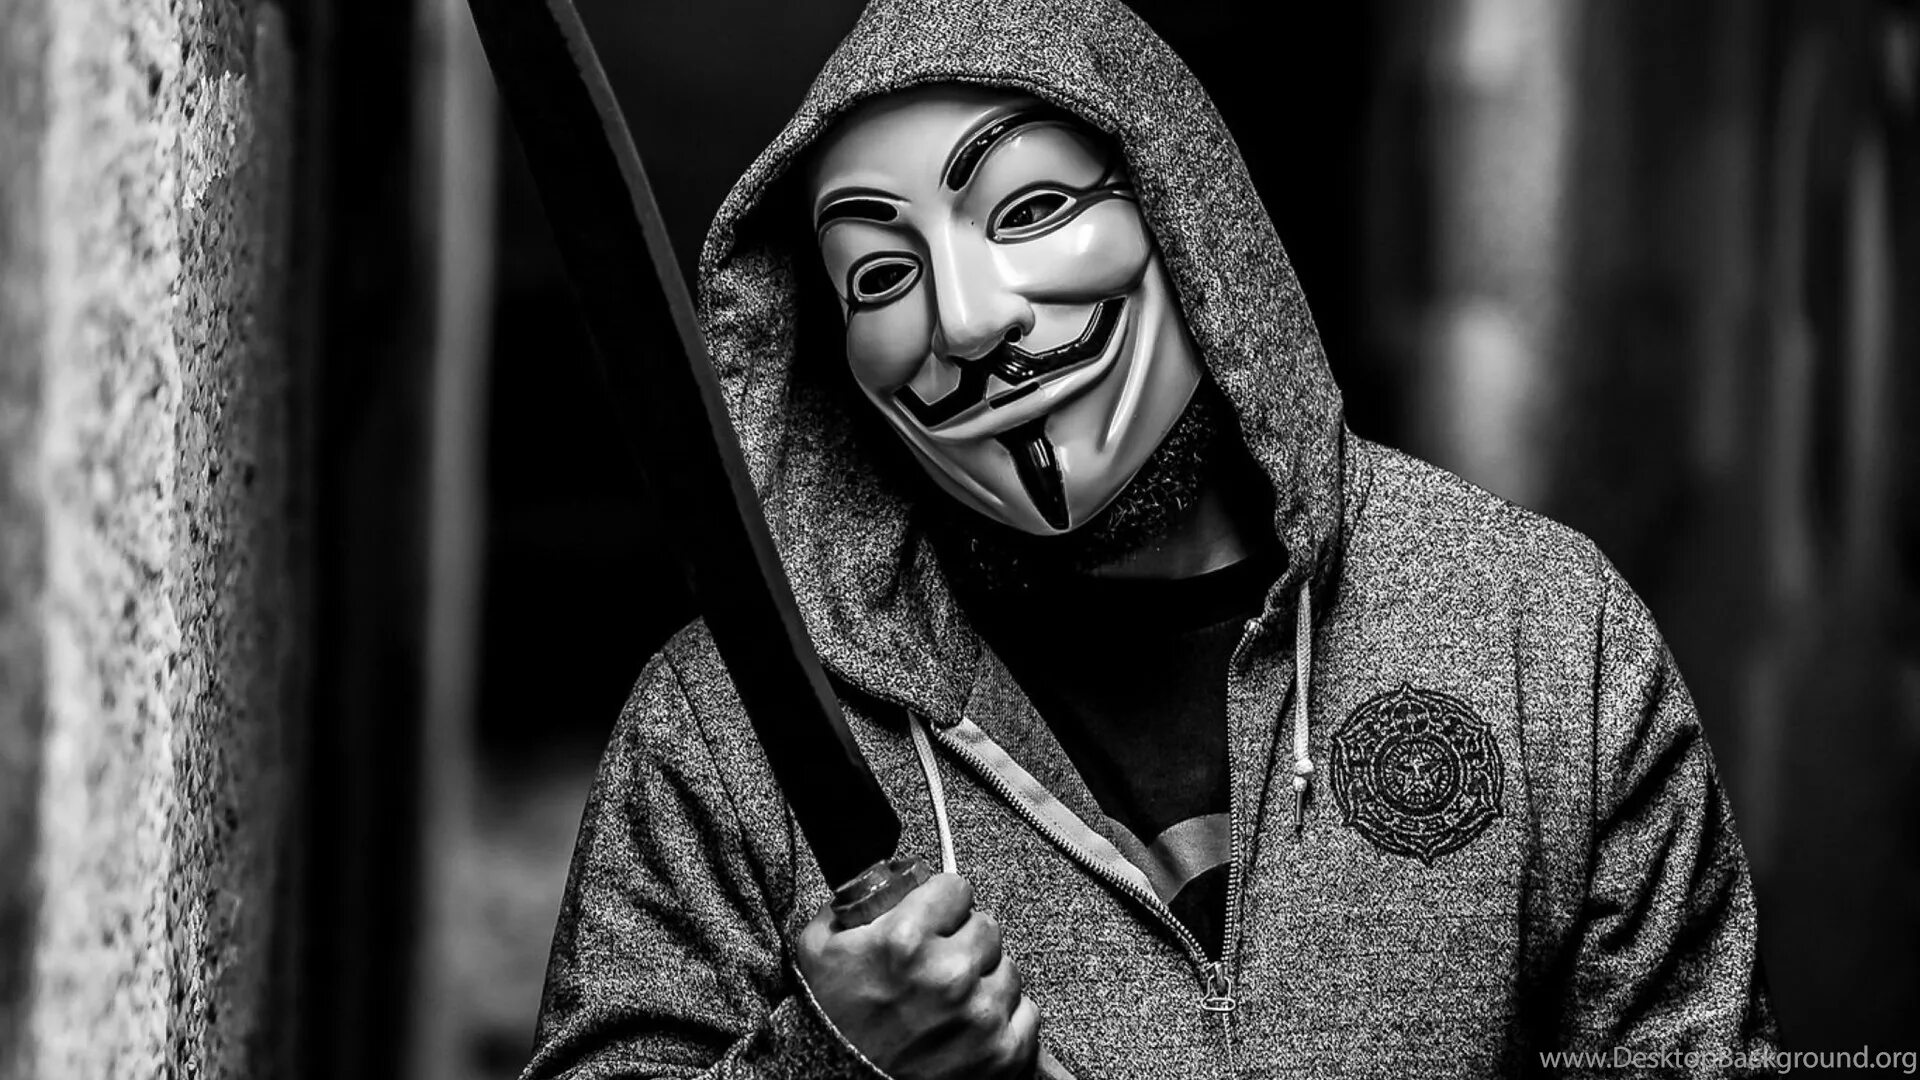 Miniature private anonymous. Человек в маске. Маска Анонимуса. Анонимус в капюшоне. Парень в маске Анонимуса.